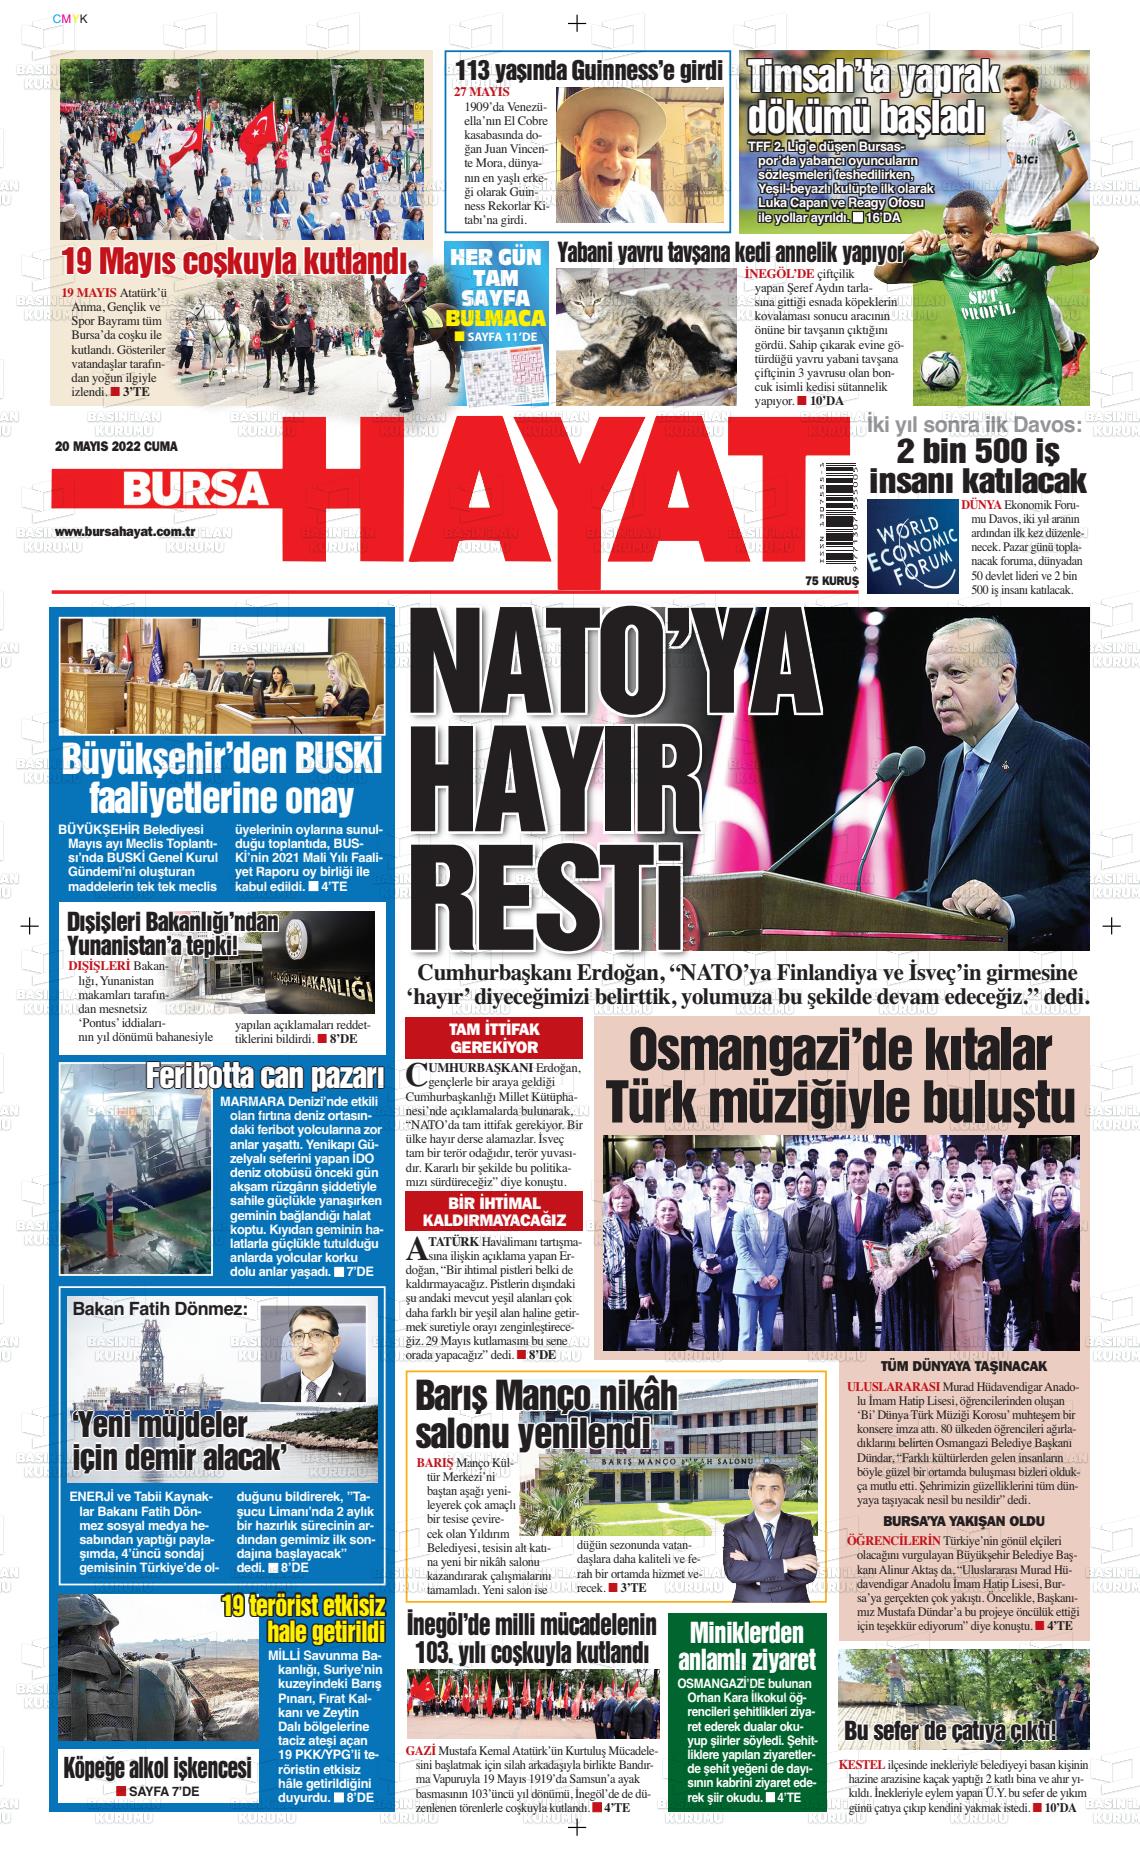 20 Mayıs 2022 Bursa Hayat Gazete Manşeti